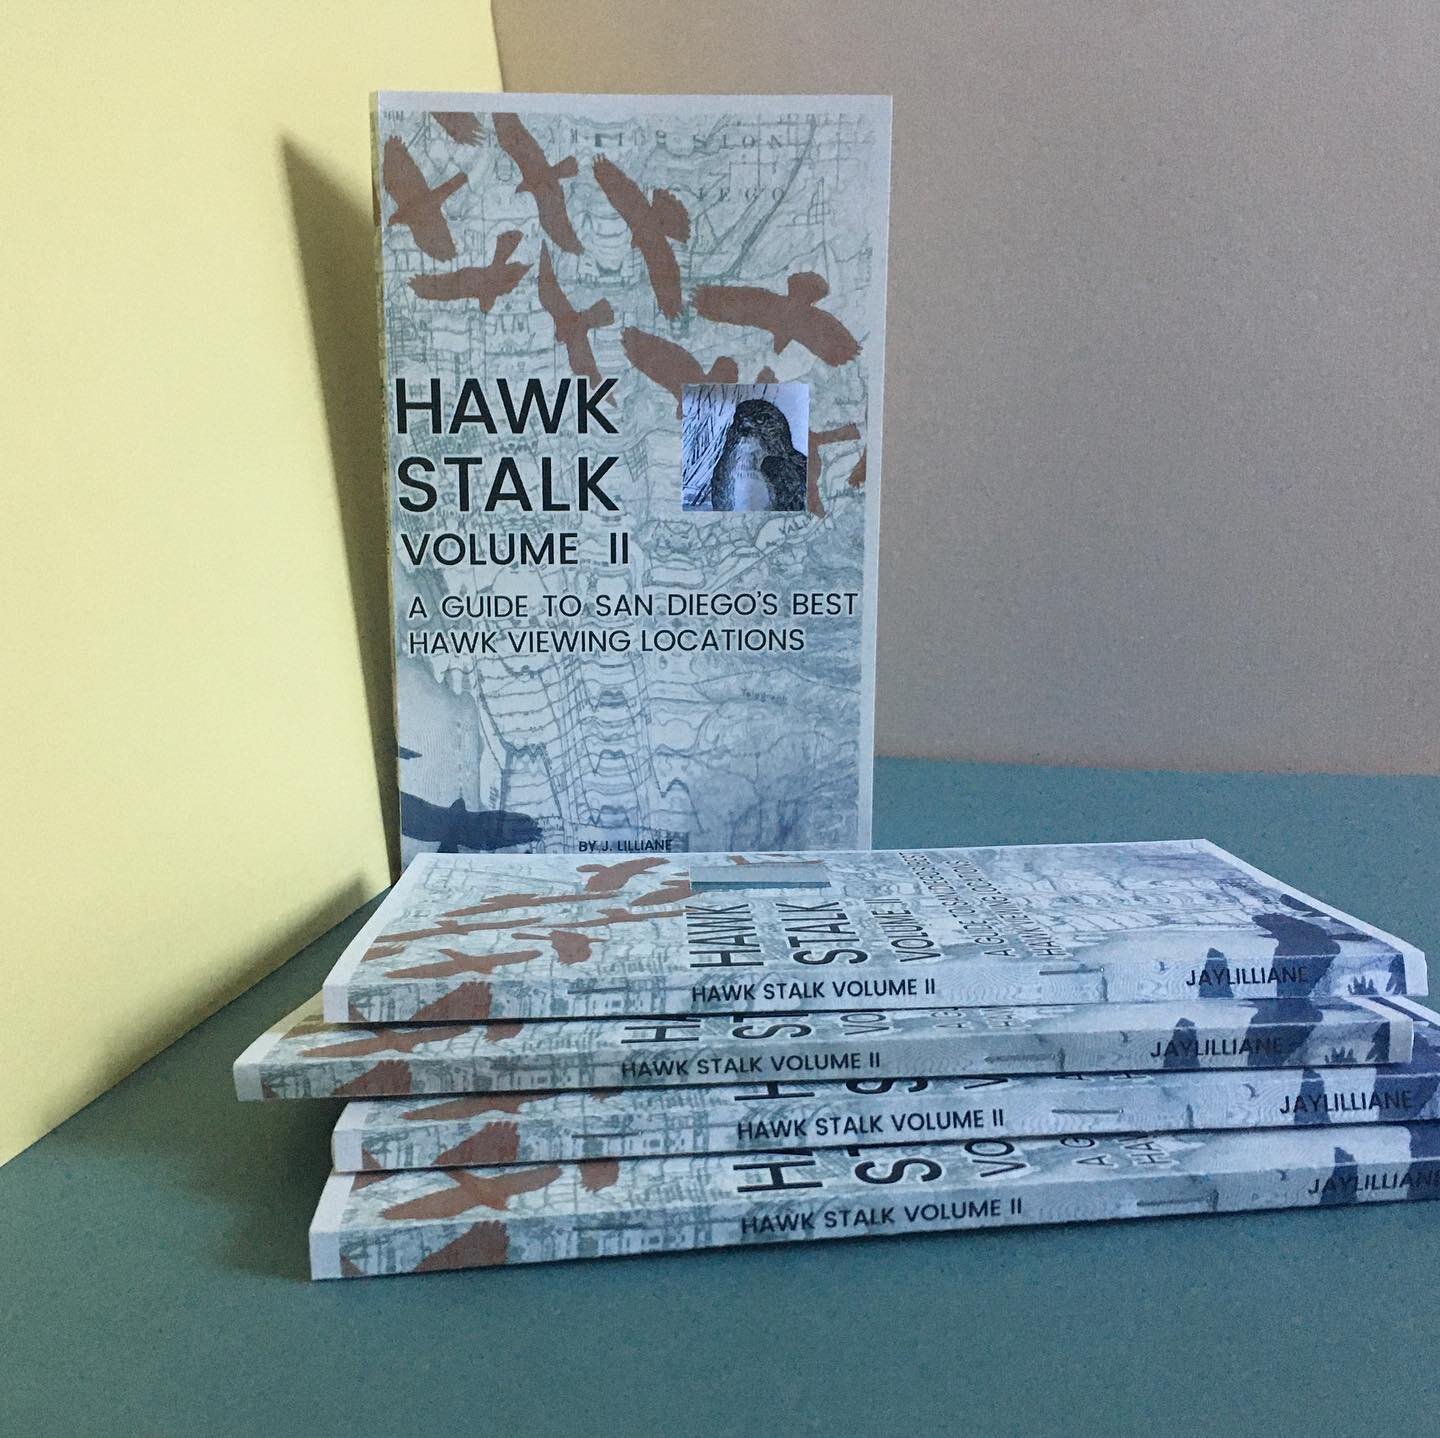 Hawk Stalk Volume II is here! If you love hawks and other birds of prey, grab a copy of my newest zine at Little Dame or on my site (link in bio)! #birdwatching #hawkstalk #hawks #birdsofprey #zines #sandiego #jeanettemadethis #jaylilliane